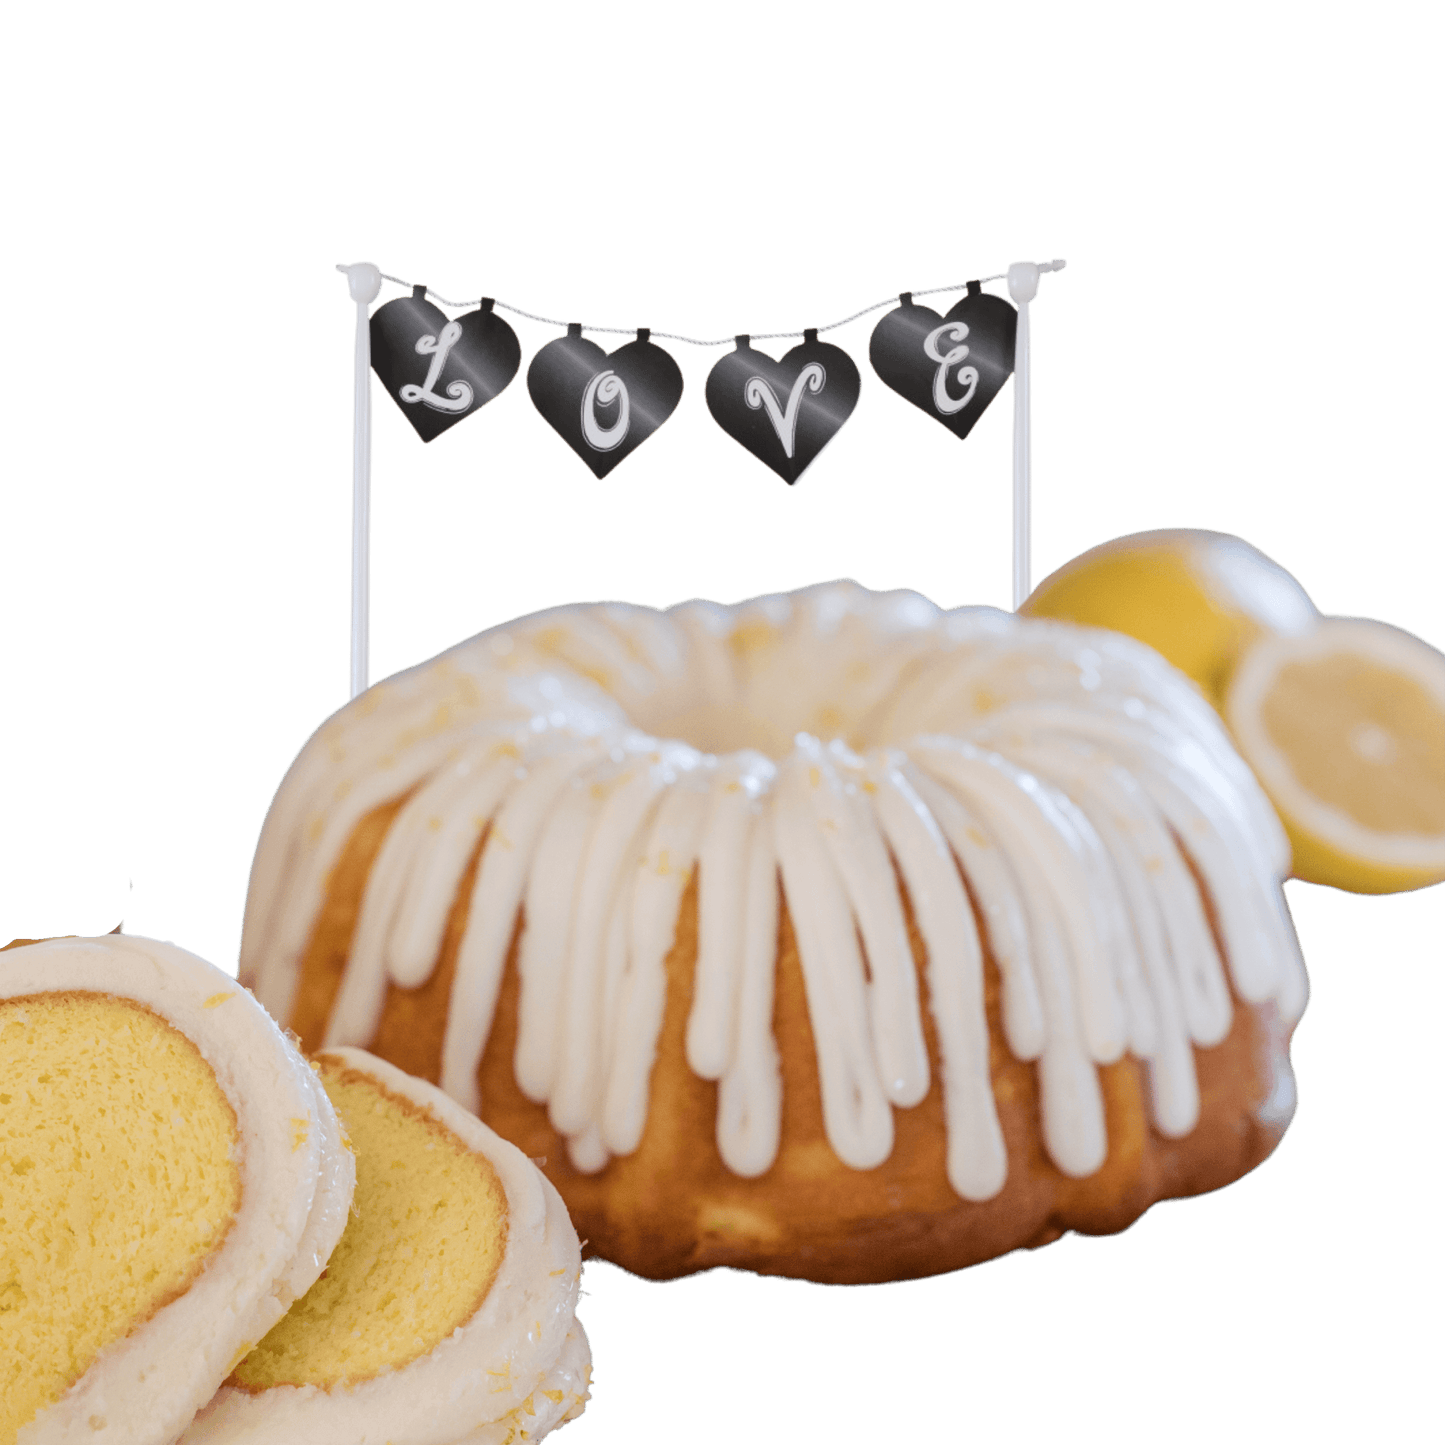 Lemon Squeeze "LOVE" Cake Banner Bundt Cake - Bundt Cakes